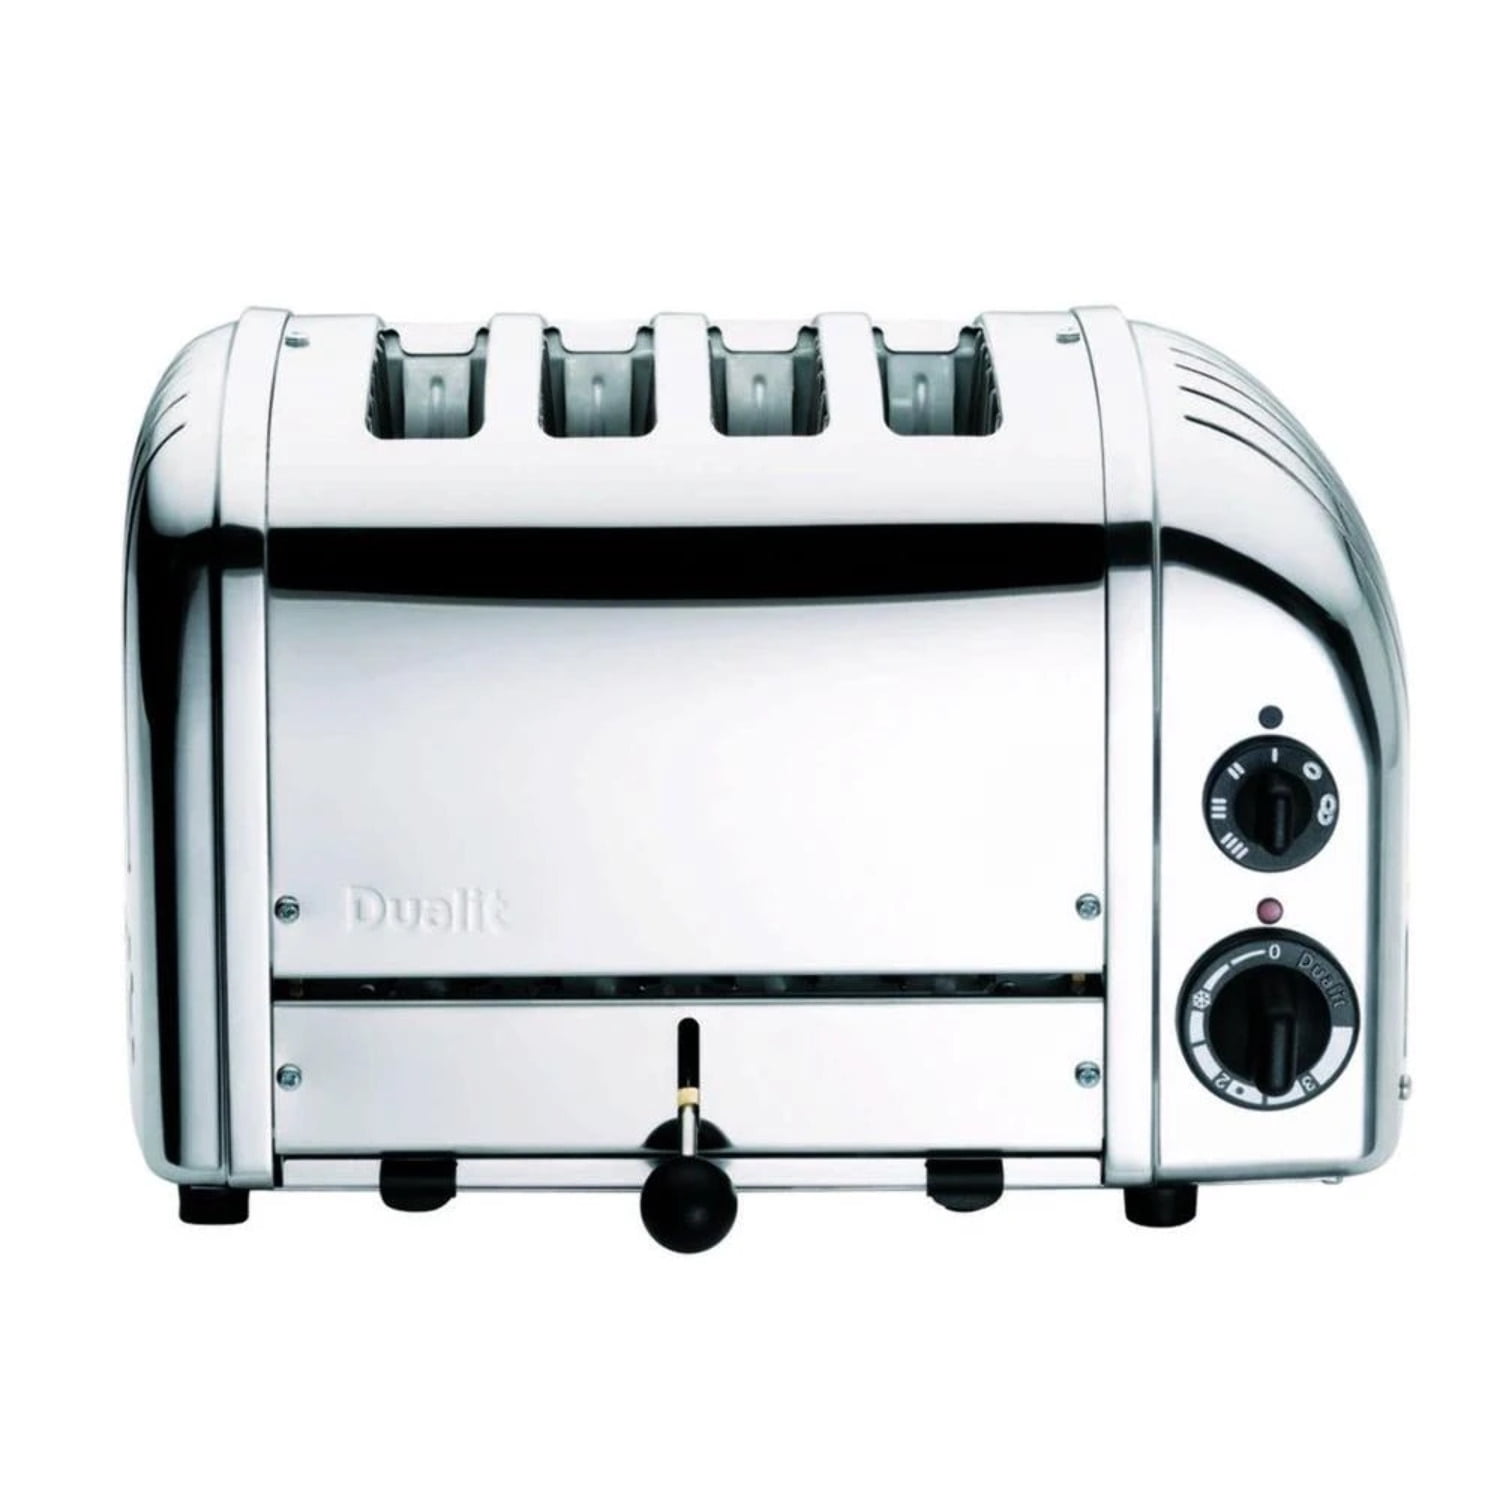  Dualit 27179 NewGen Toaster, Clay: Home & Kitchen